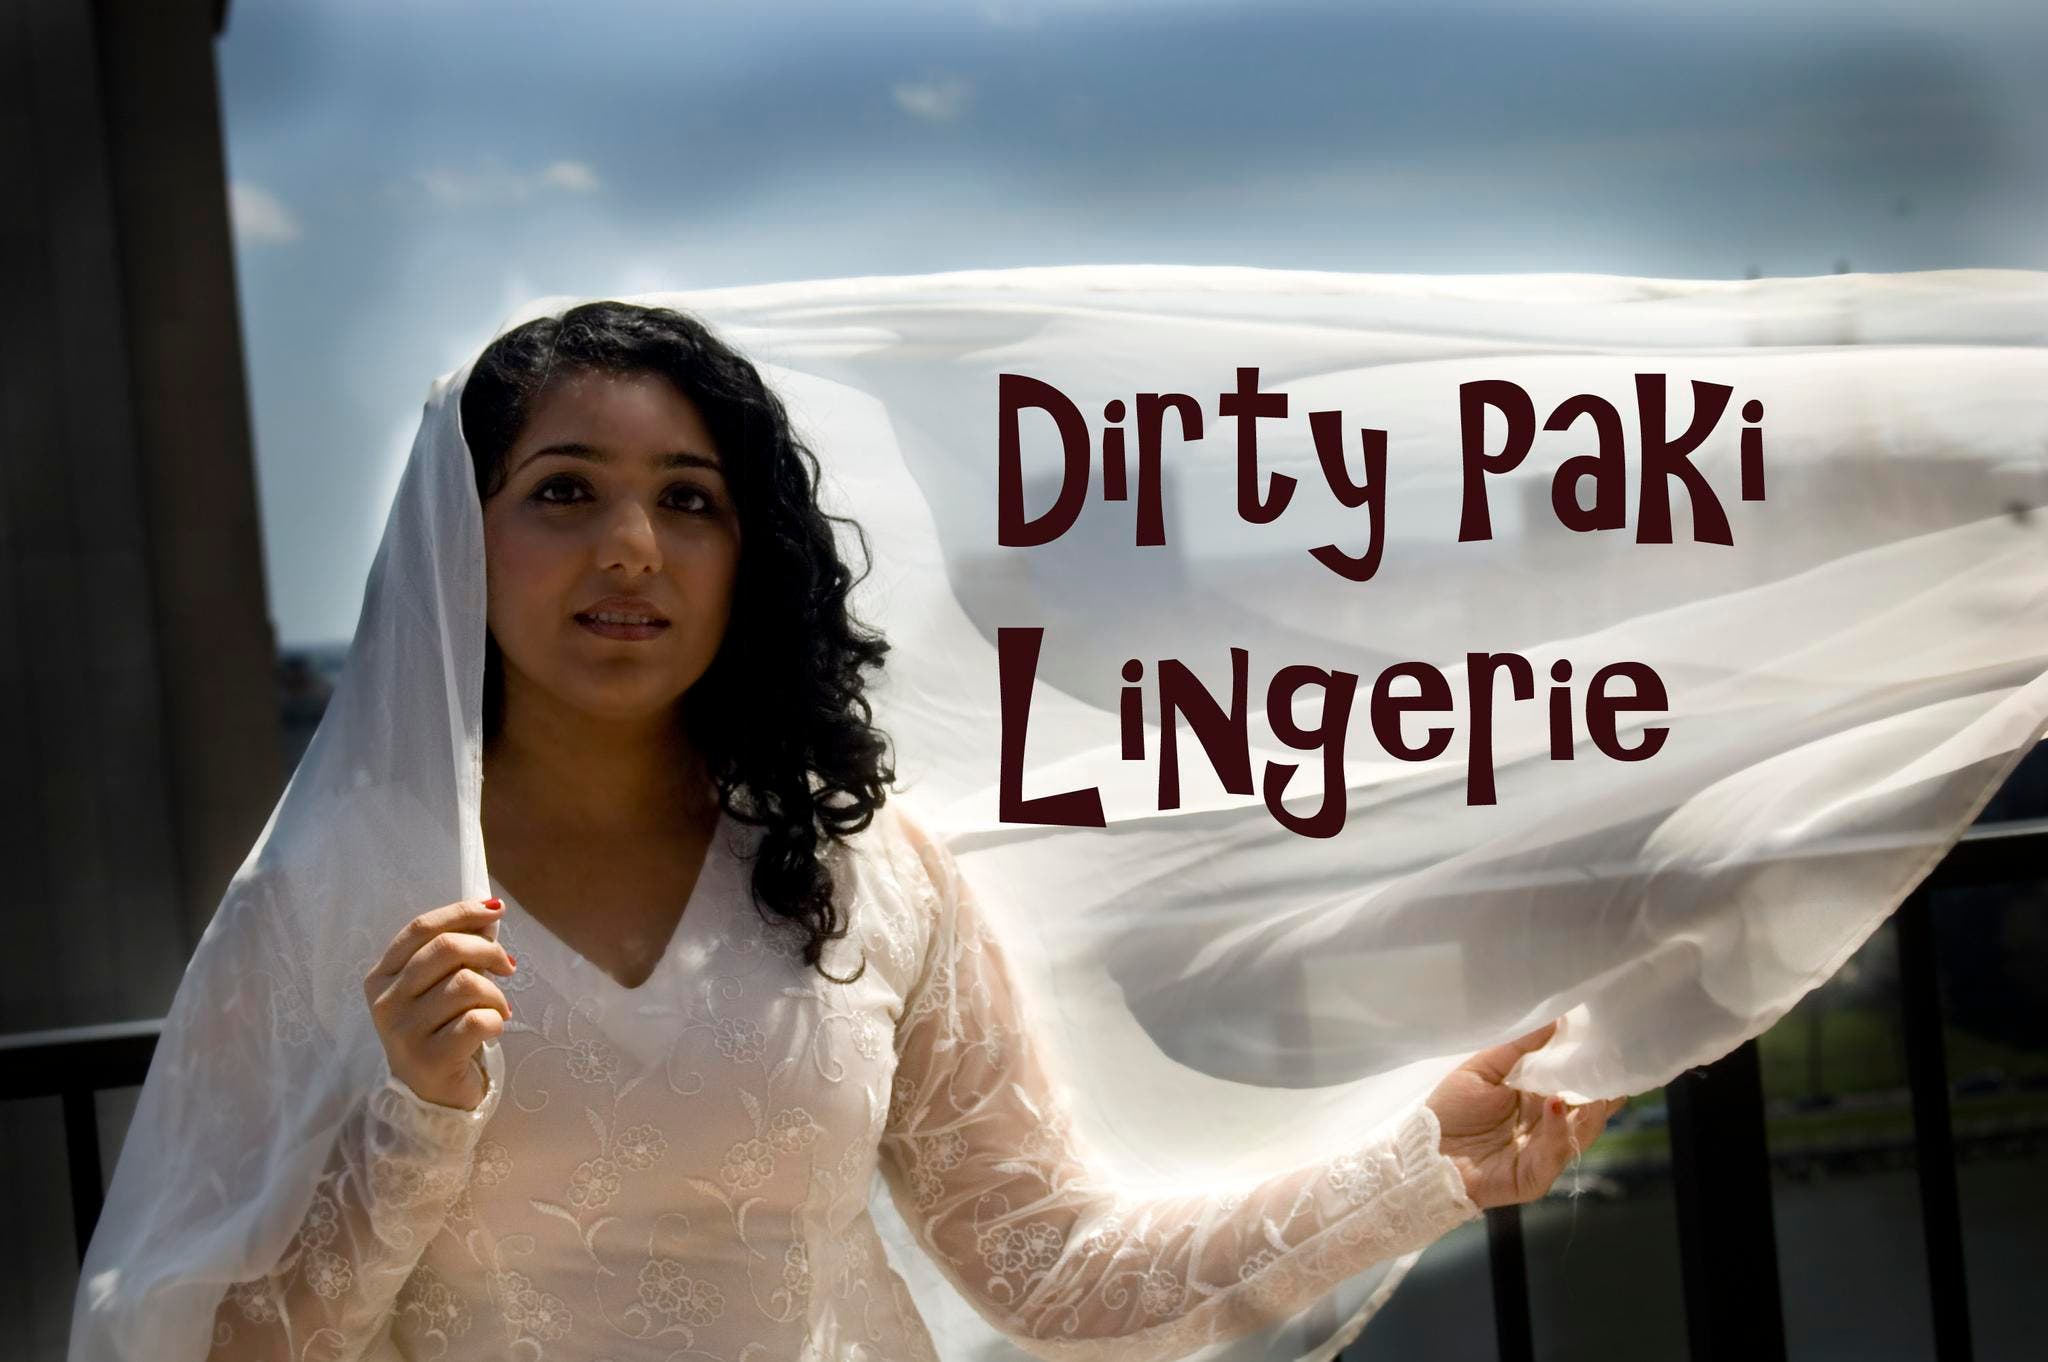 Play Dirty Paki Lingerie makes London debut after world tour Al Arabiya English photo